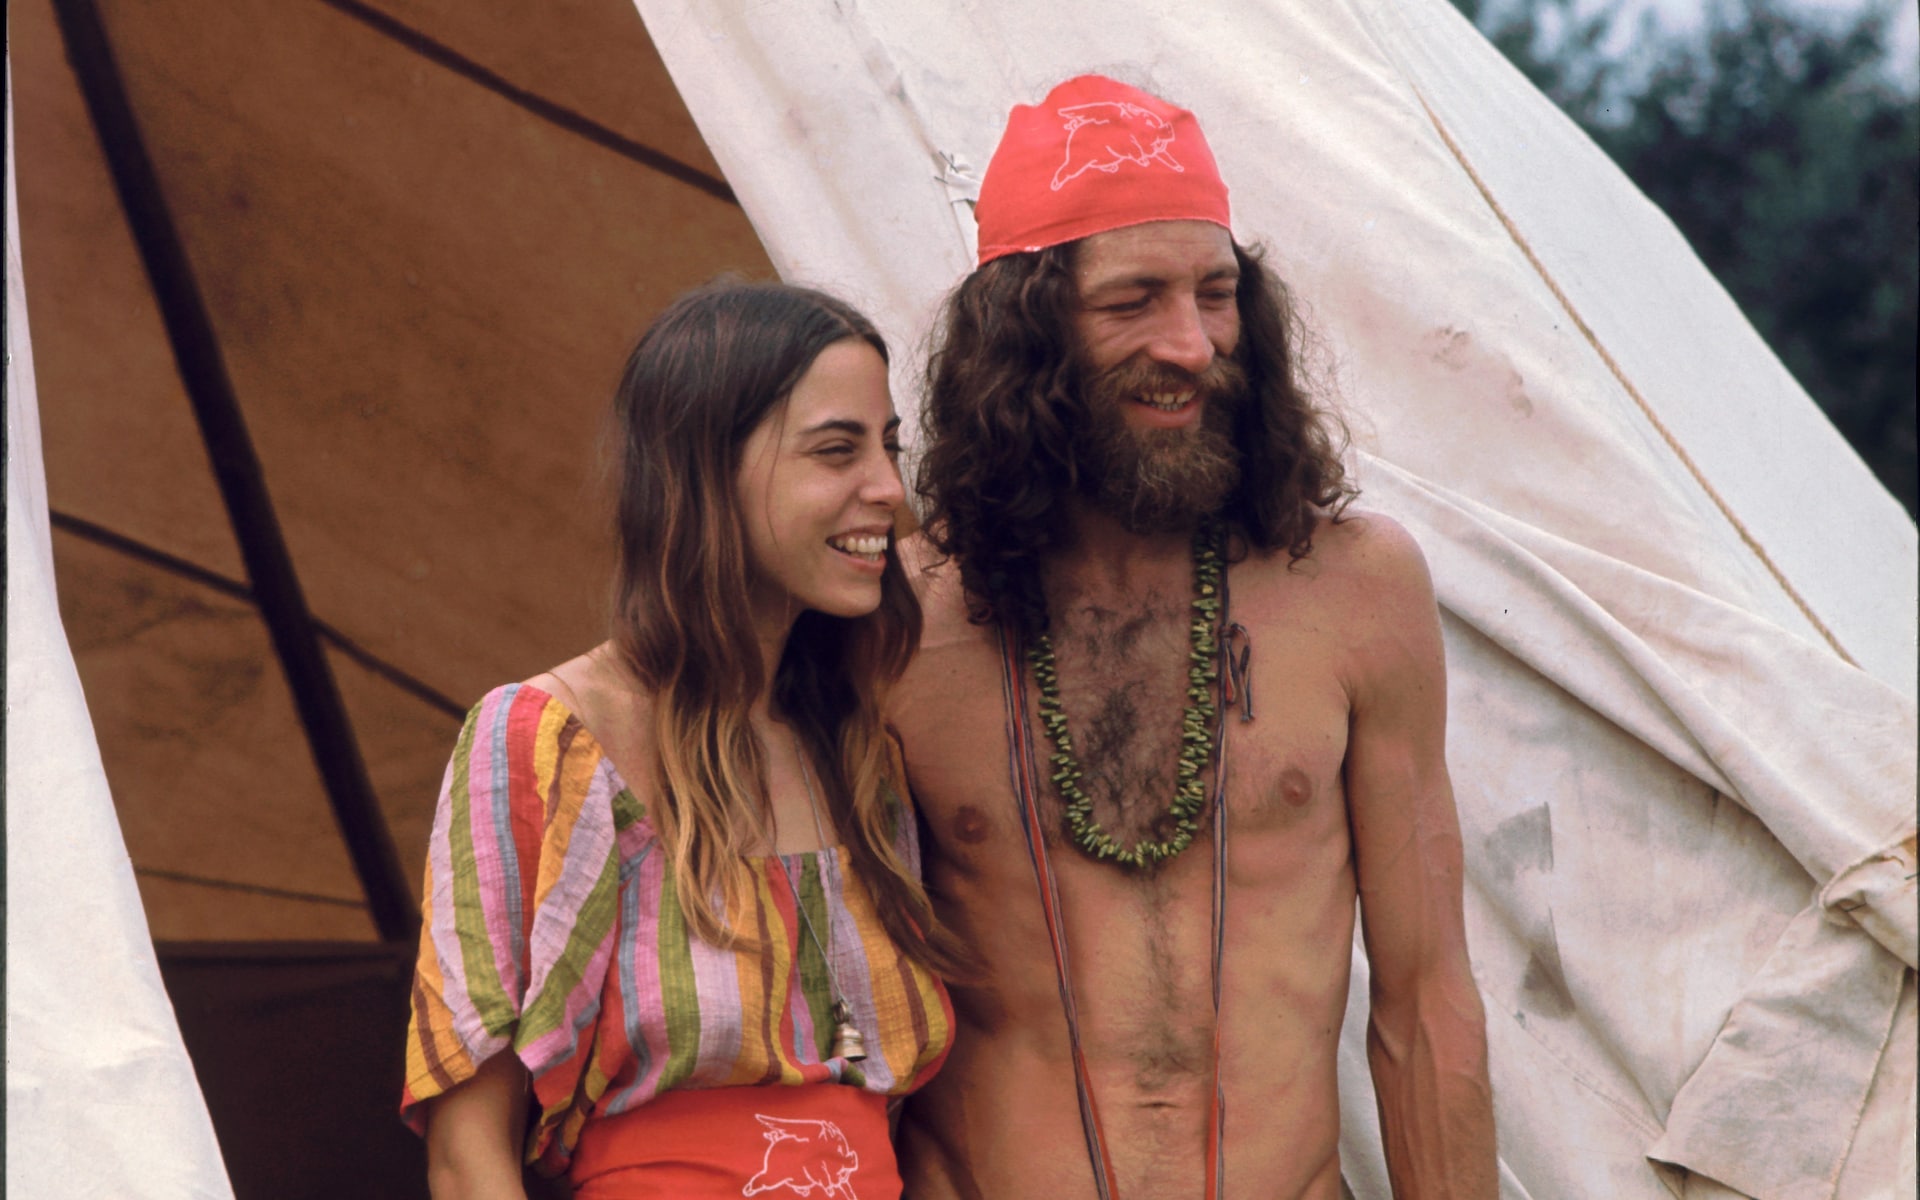 the hippie beard